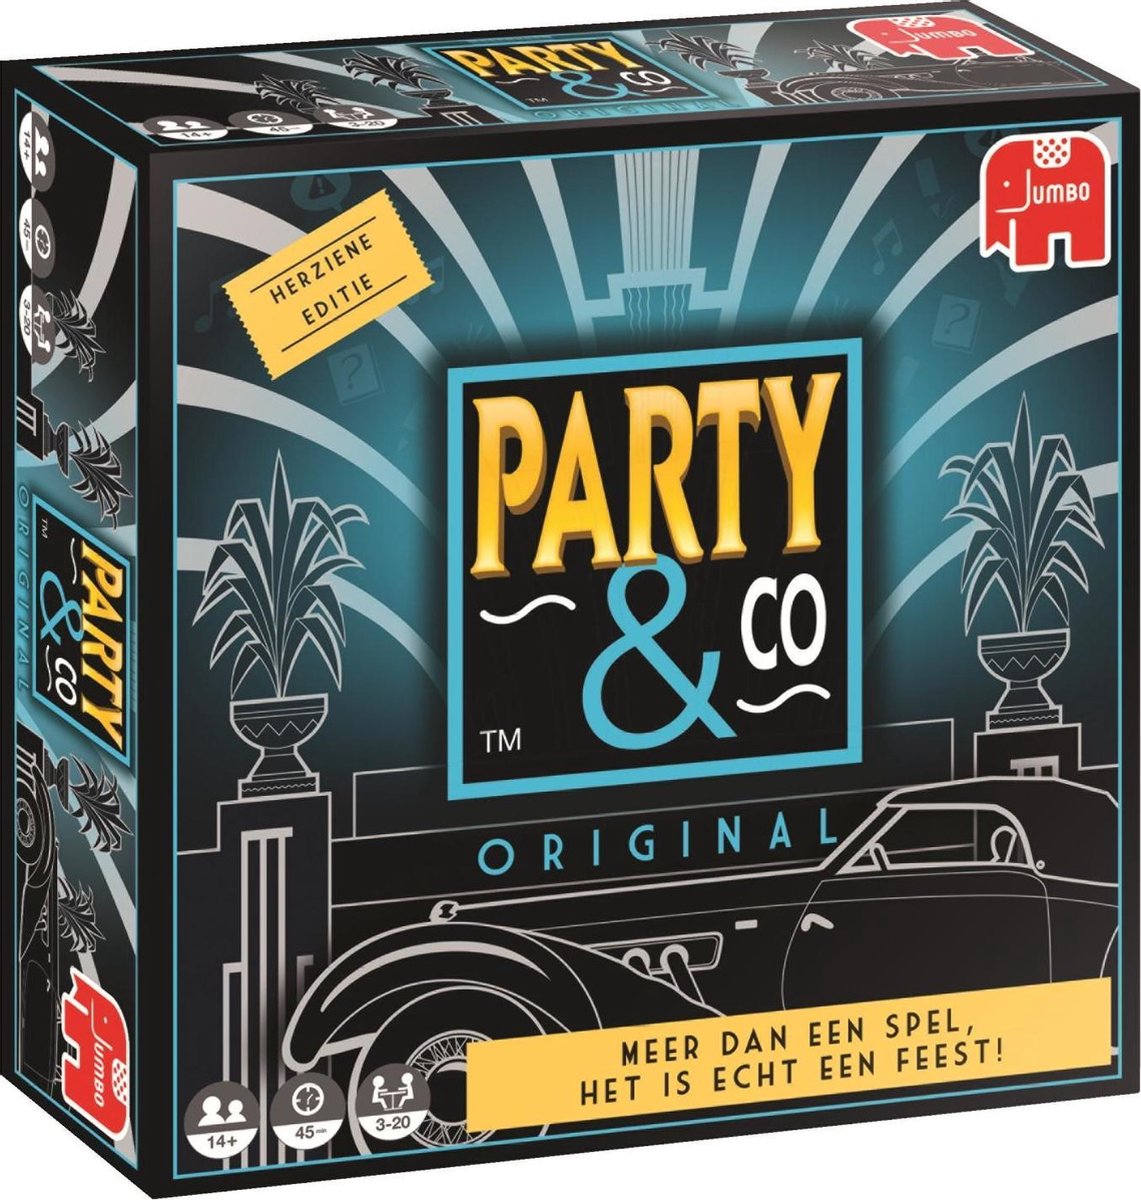 Party & Co Original - Jumbo